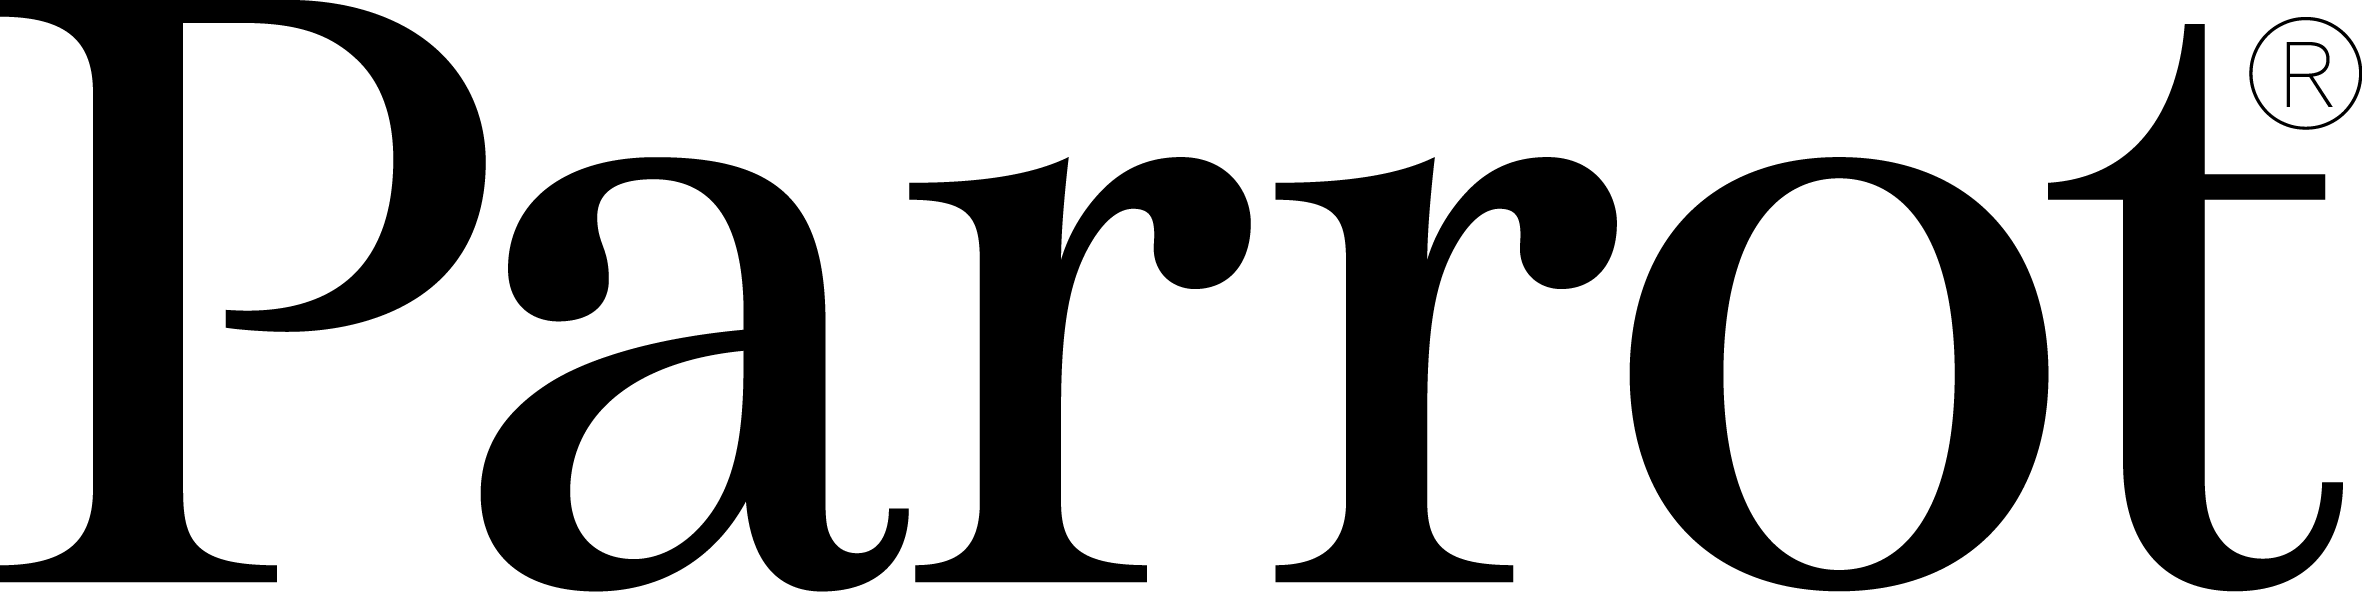 Logo marca Parrot de drones